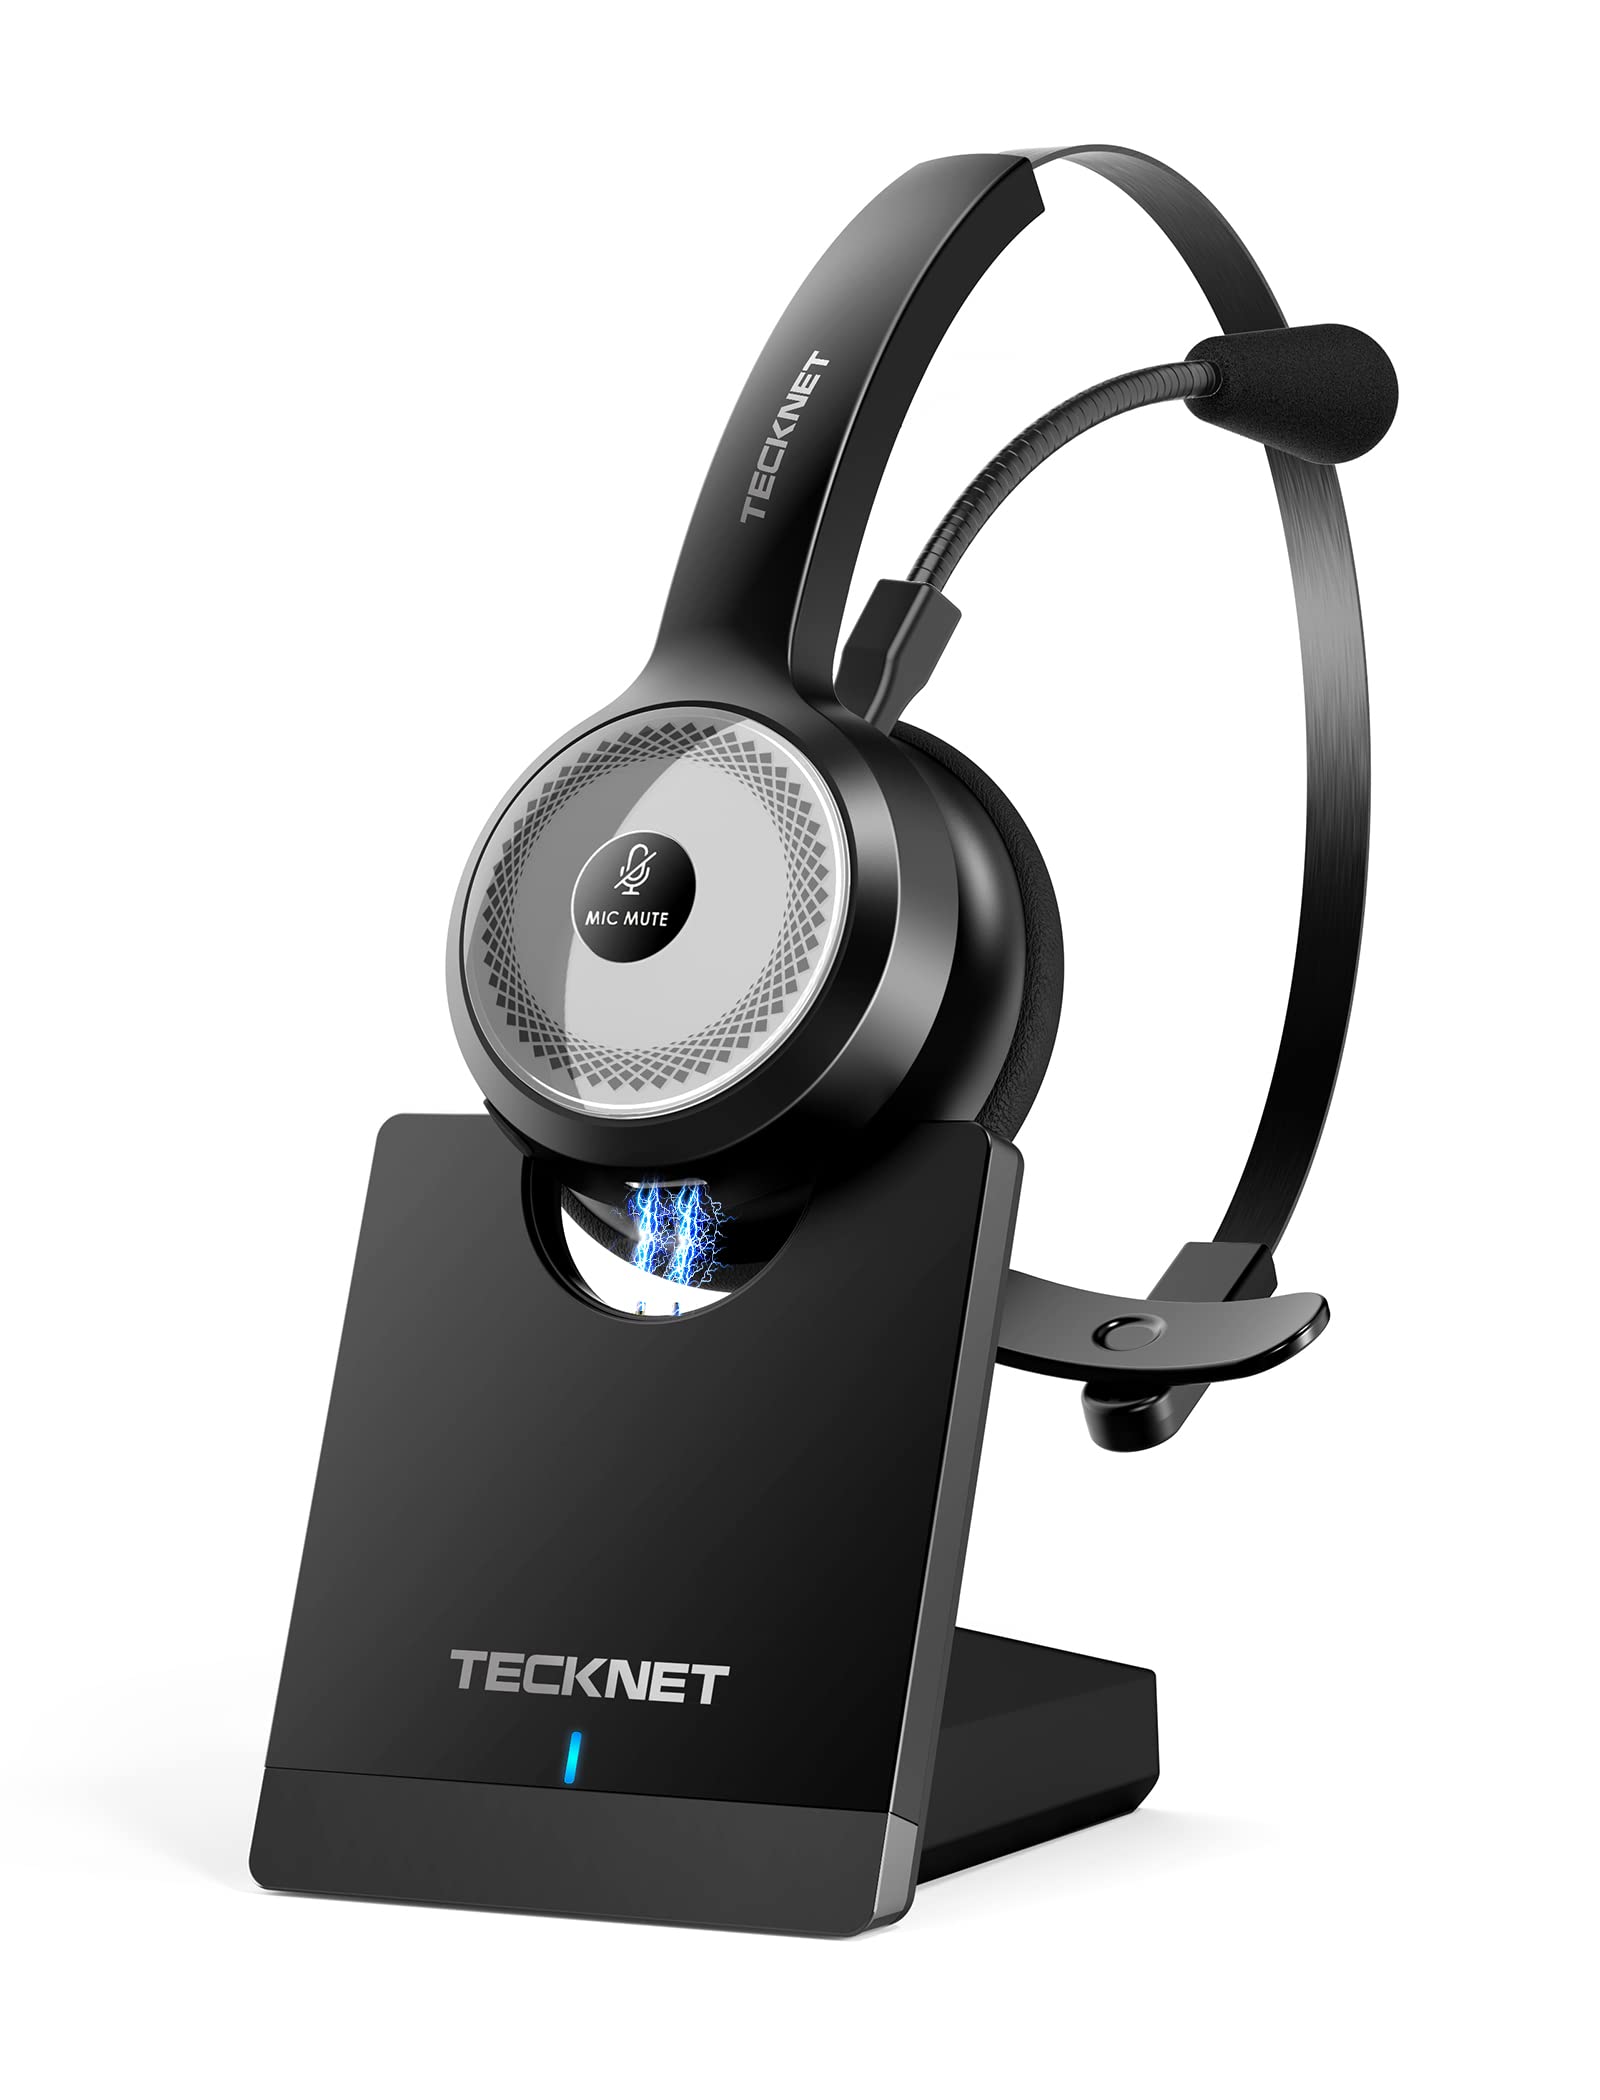 TECKNET 带麦克风的无线蓝牙 5.0 耳机、带充电底座的 AI 降噪入耳式耳机，适用于 PC、手机、计算机、呼叫中心、家庭办公必需品